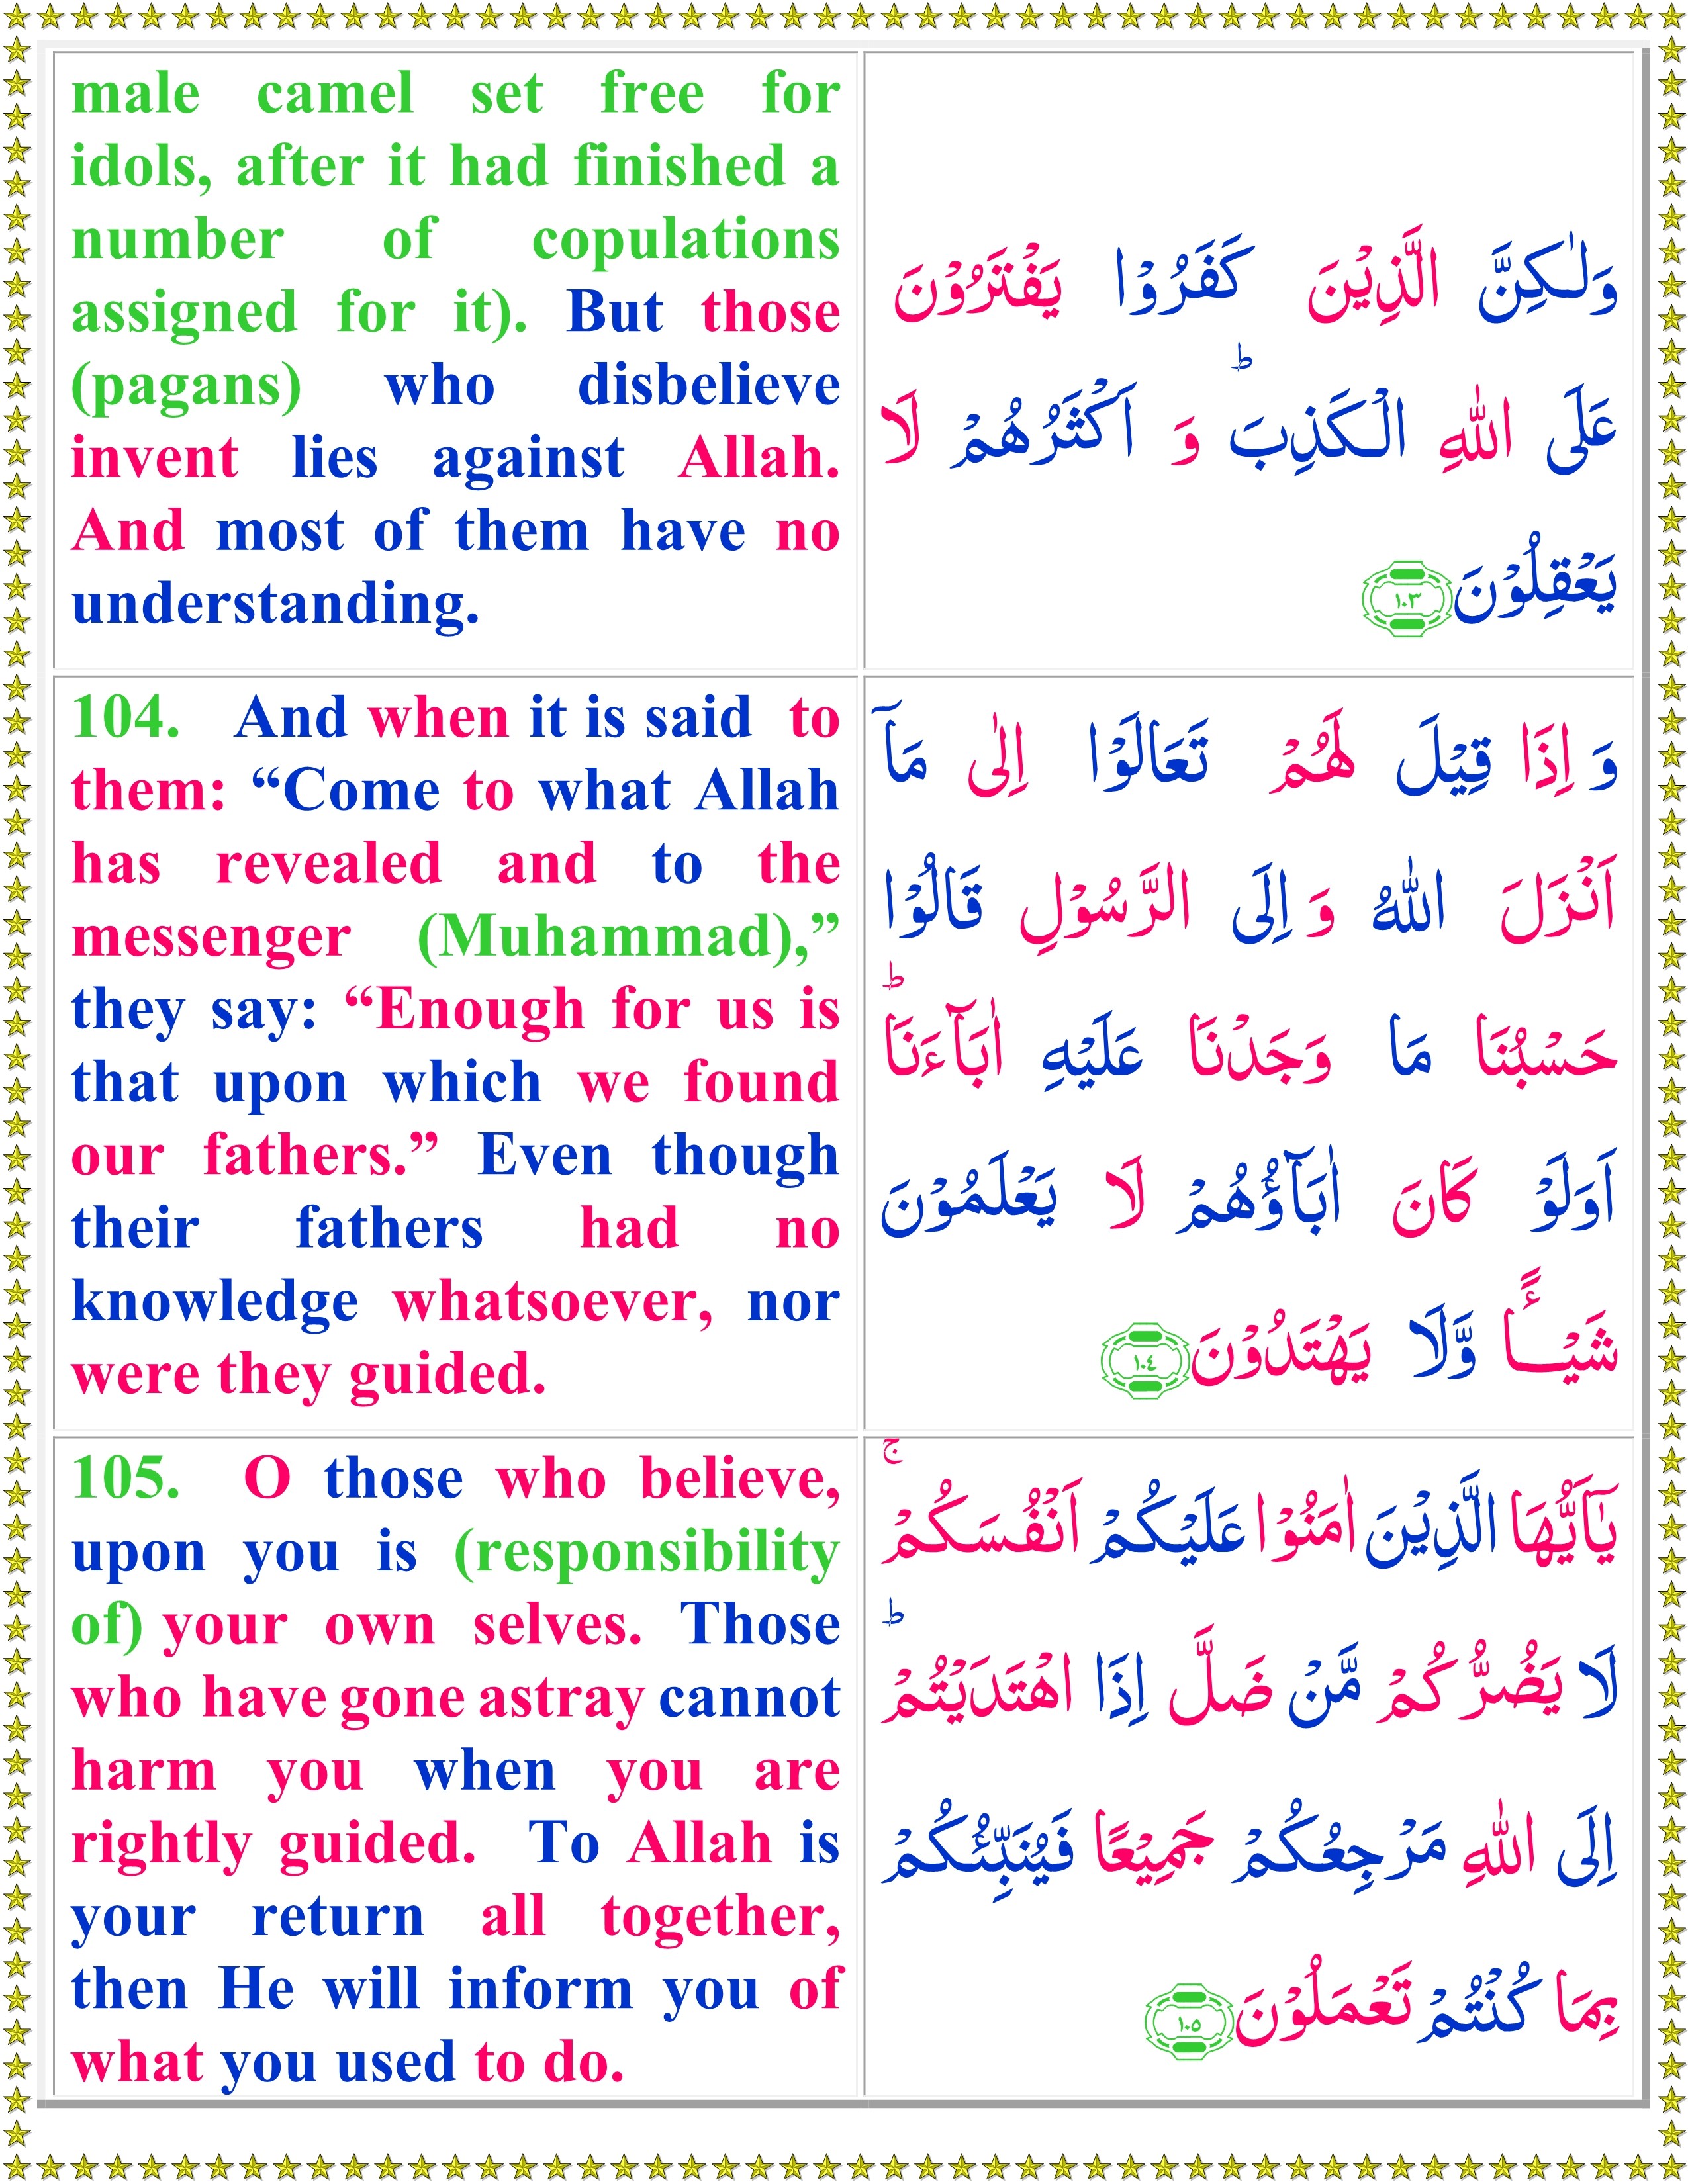 Read Surah Al Maidah With English Translation Page 5 Of 5 Quran O